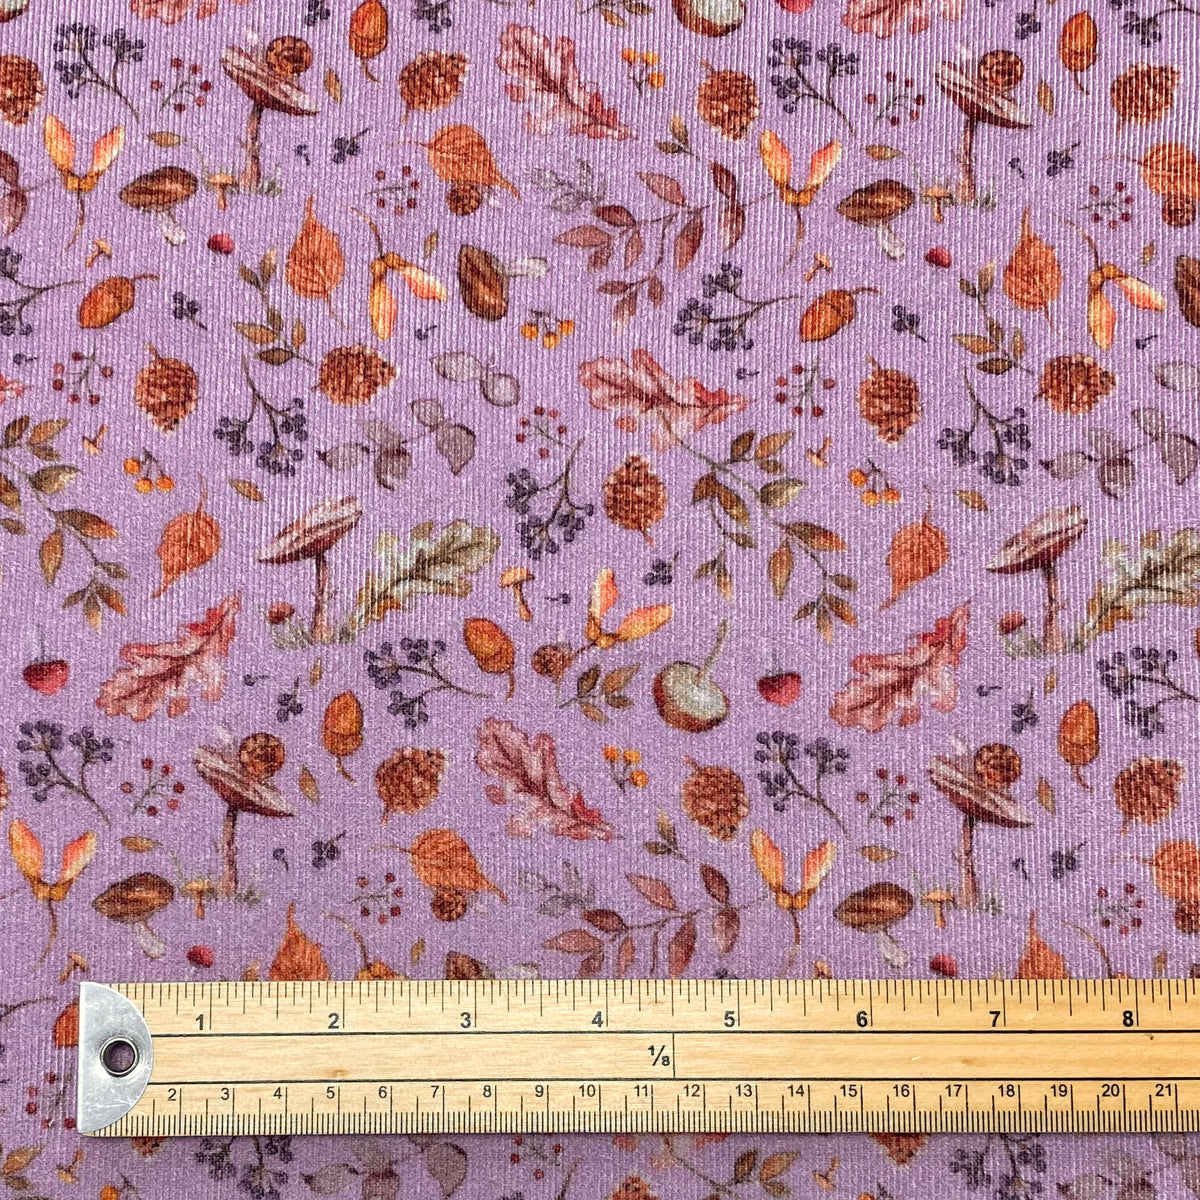 Autumn Scenery on Lilac Needlecord Fabric